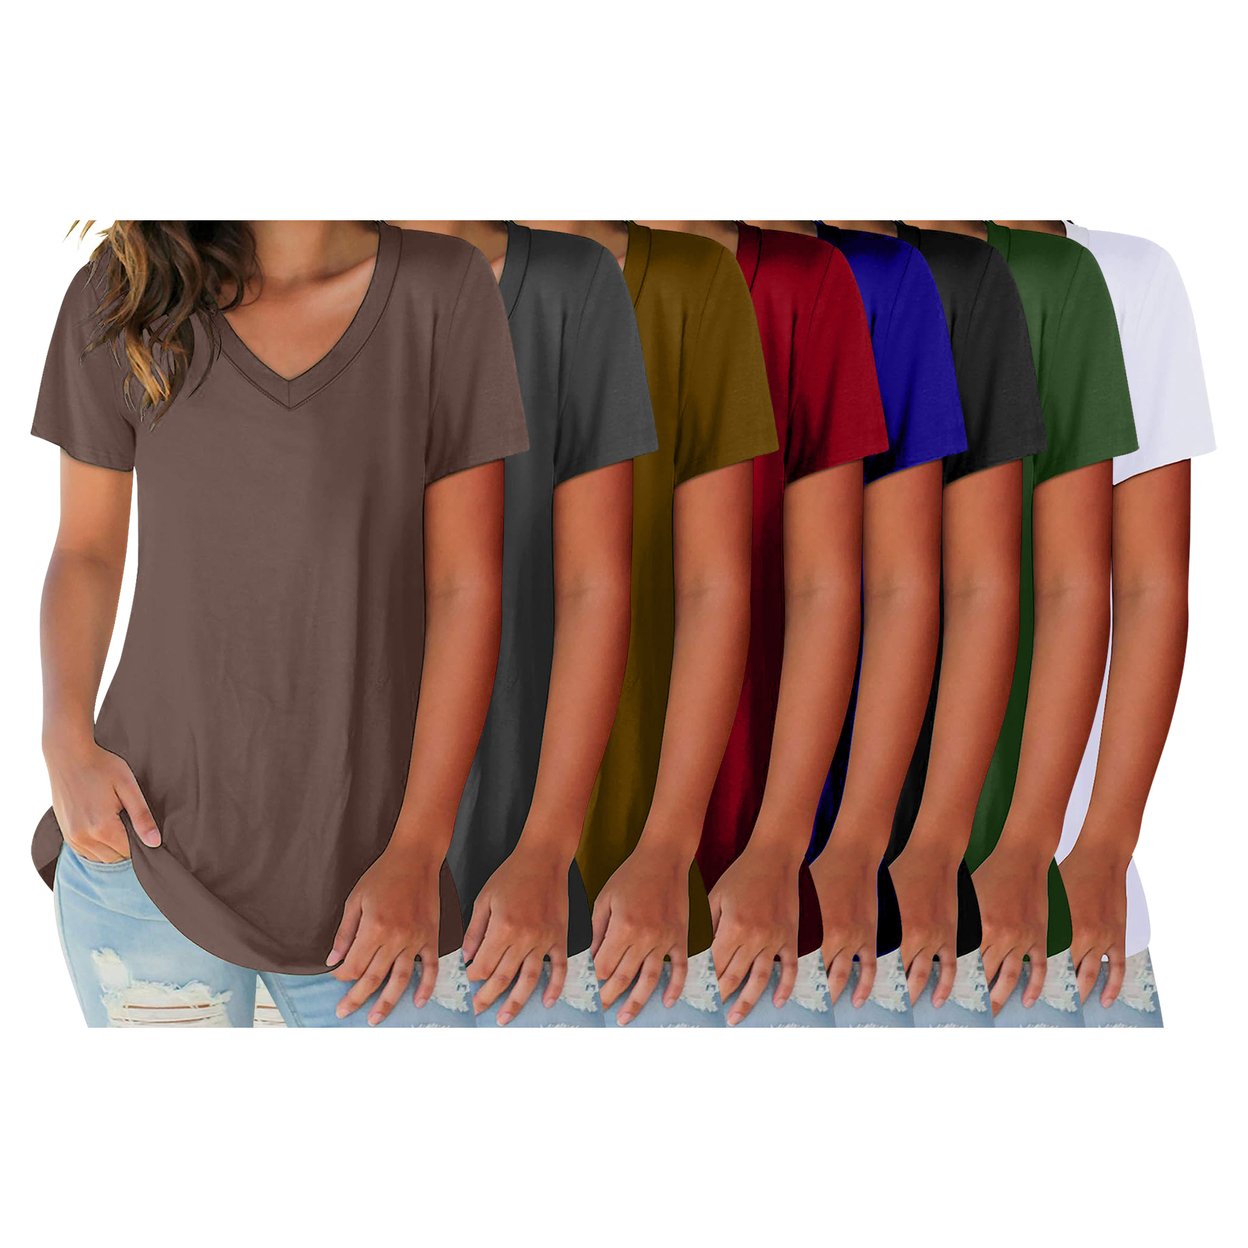 2-Pack: Women's Ultra Soft Smooth Cotton Blend Basic V-Neck Short Sleeve Shirts - Grey & Red, Medium